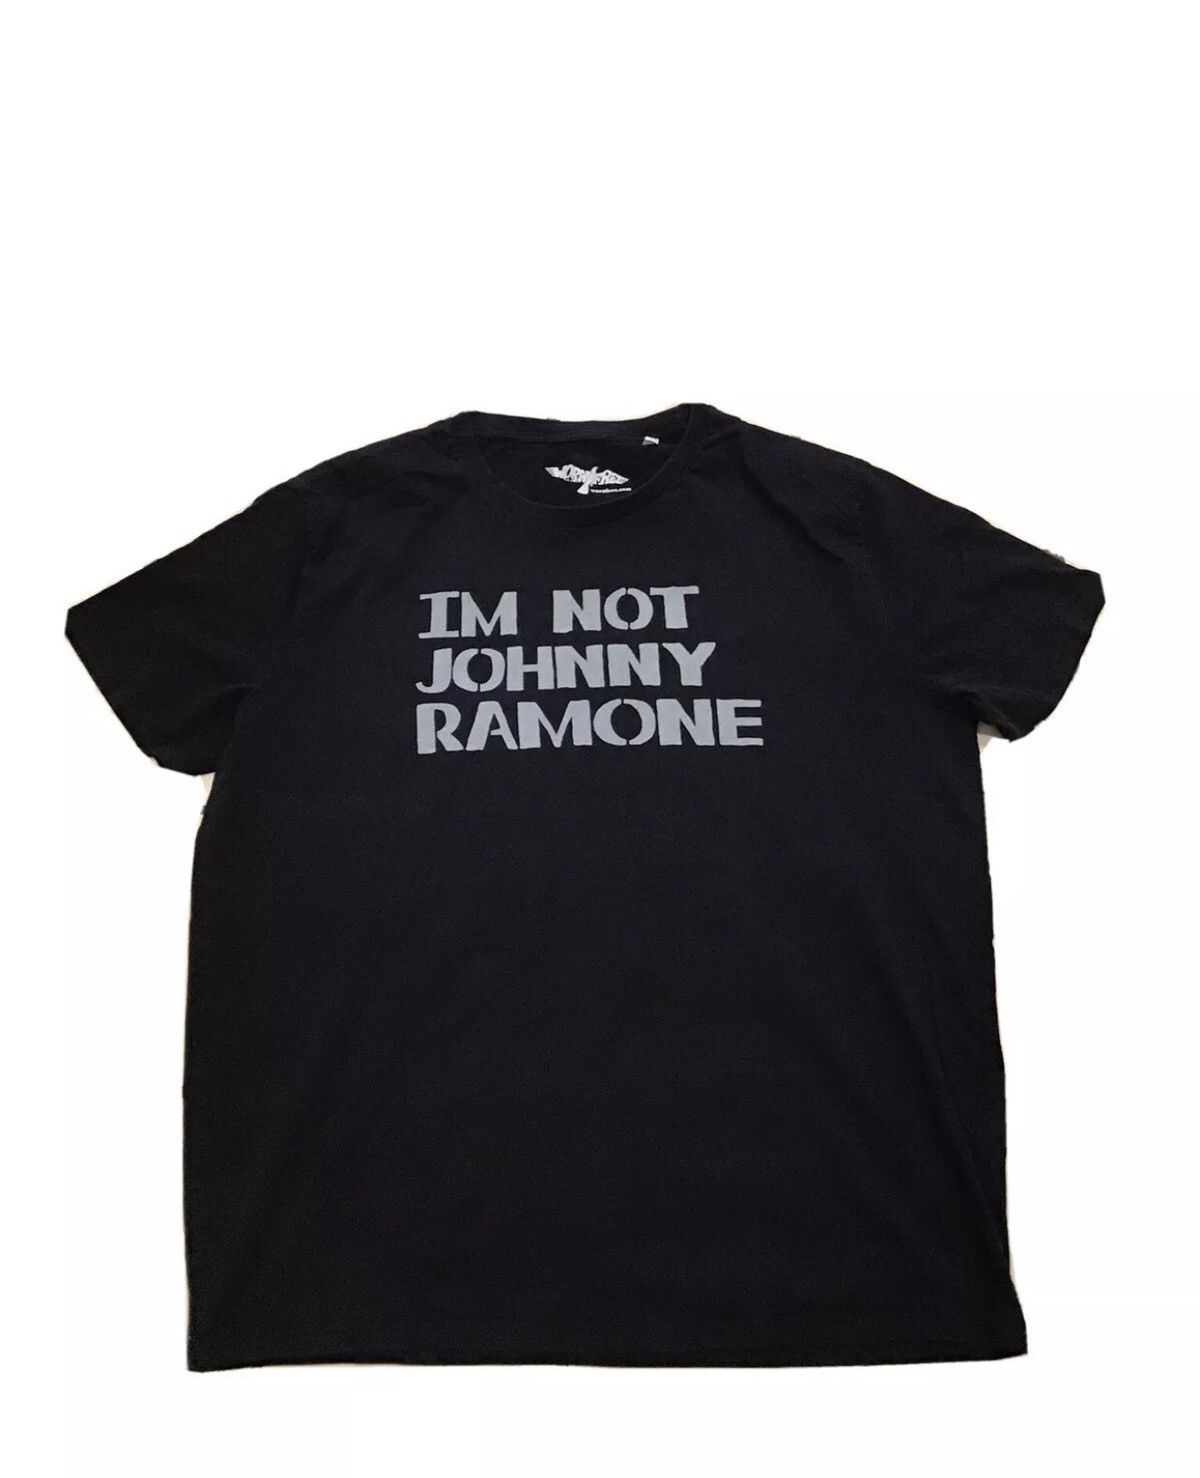 Band Tees Worn Free Im Not Johnny Ramone The Ramones Punk Rock T-shirt Size US XXL / EU 58 / 5 - 2 Preview